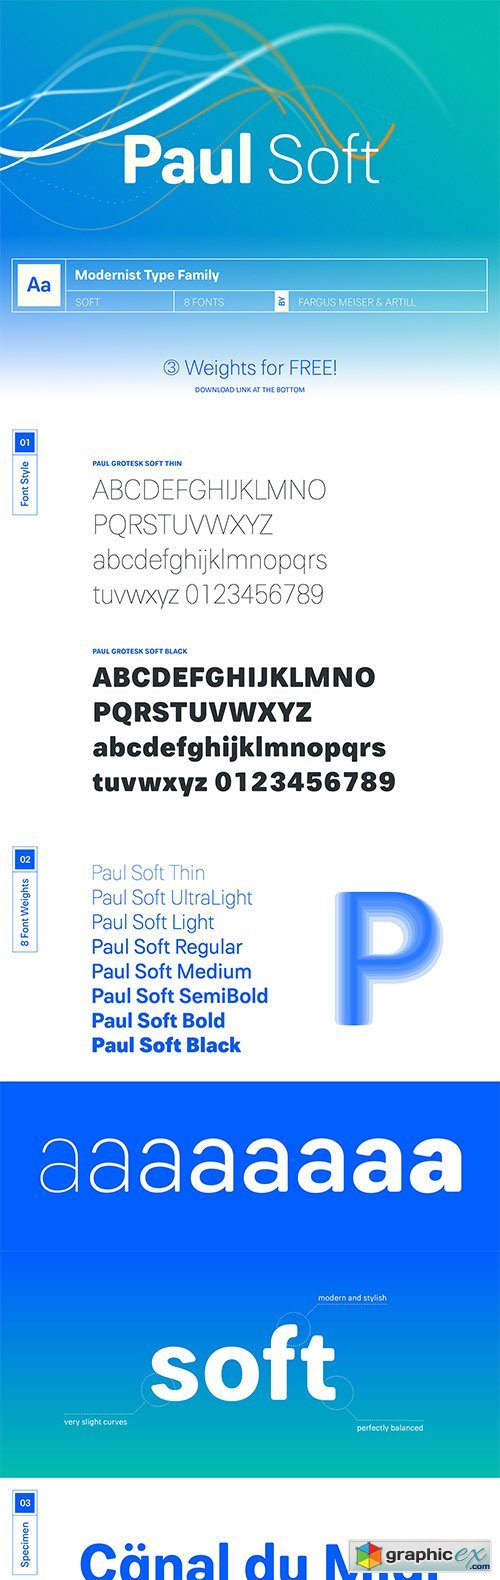 Paul Soft Font Family